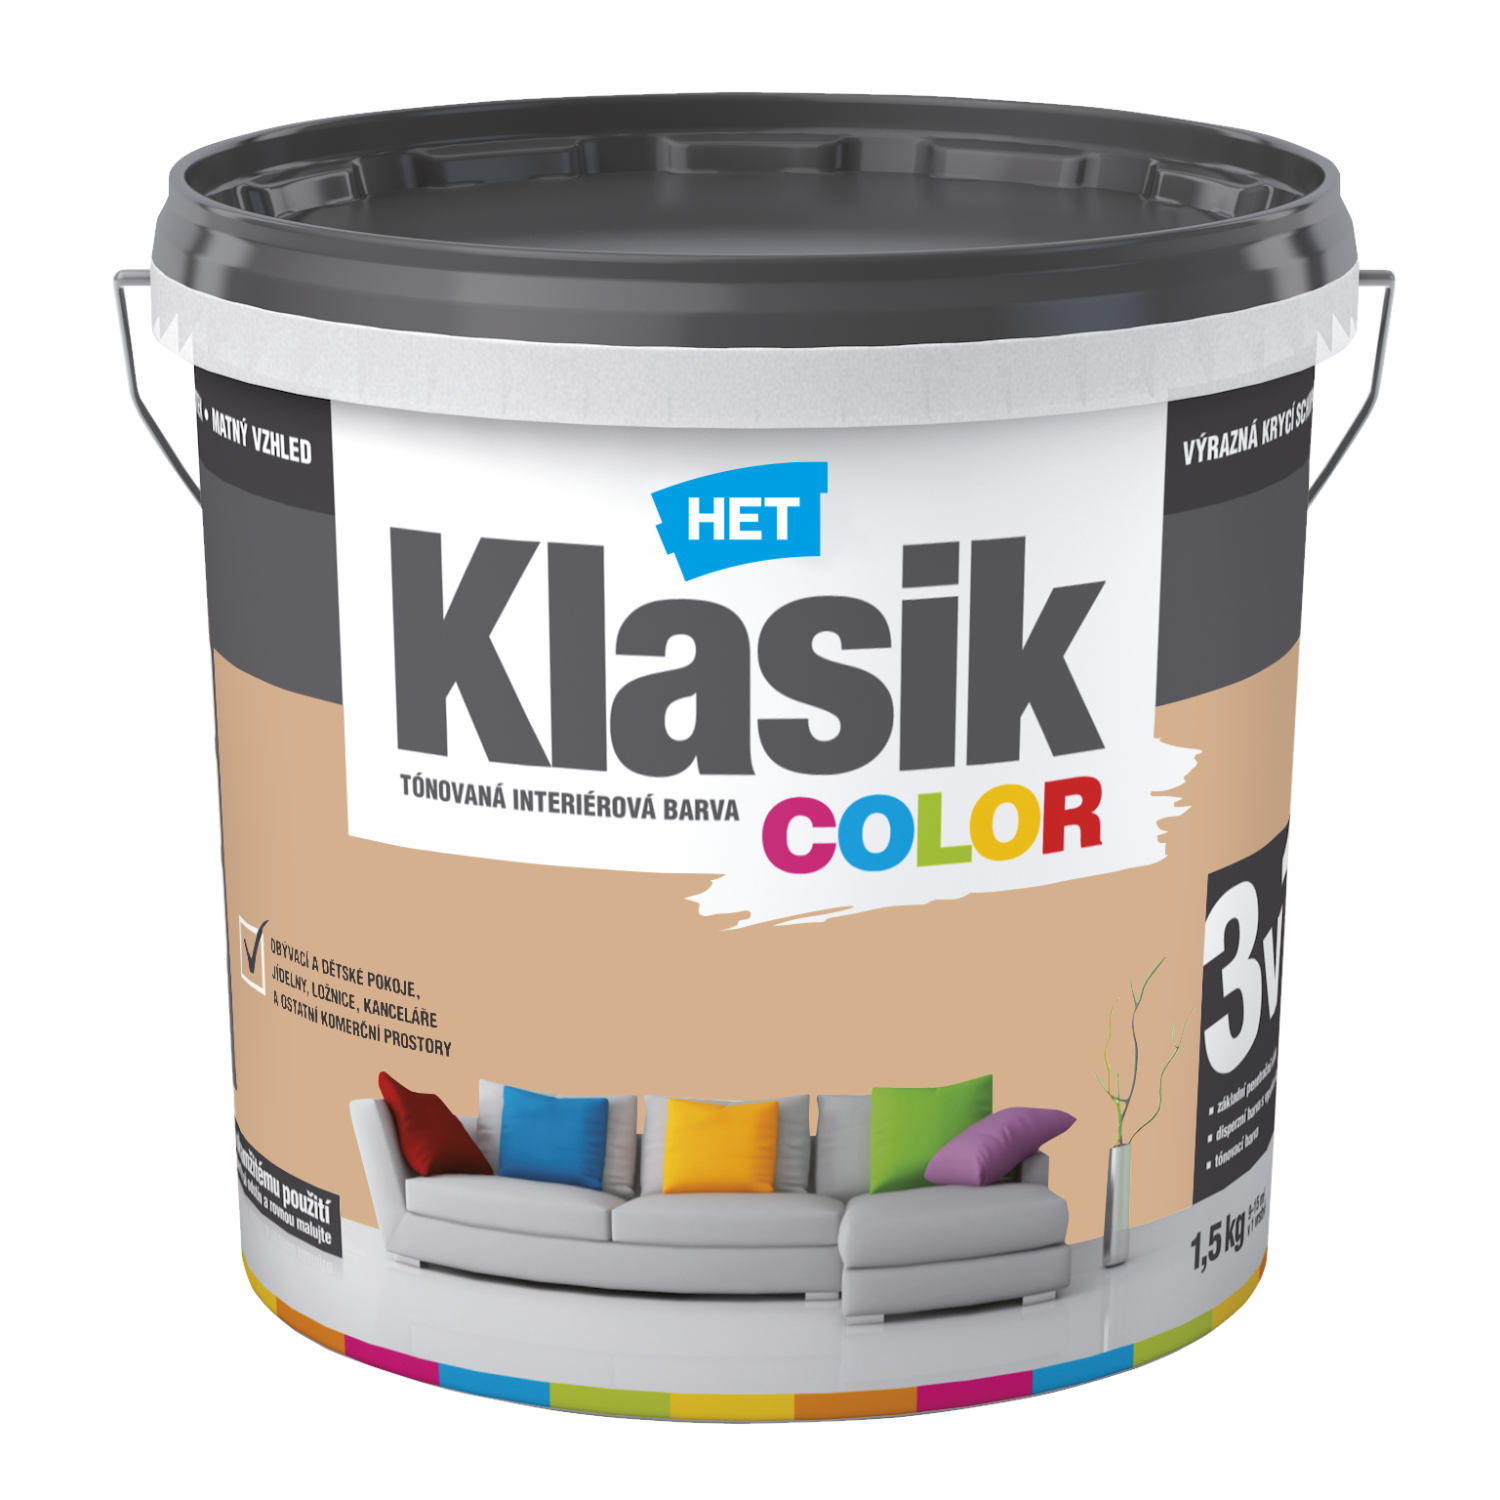 HET Klasik COLOR tónovaná interiérová akrylátová disperzná oteruvzdorná farba 1,5 kg, KC0267 - hnedý karamelový